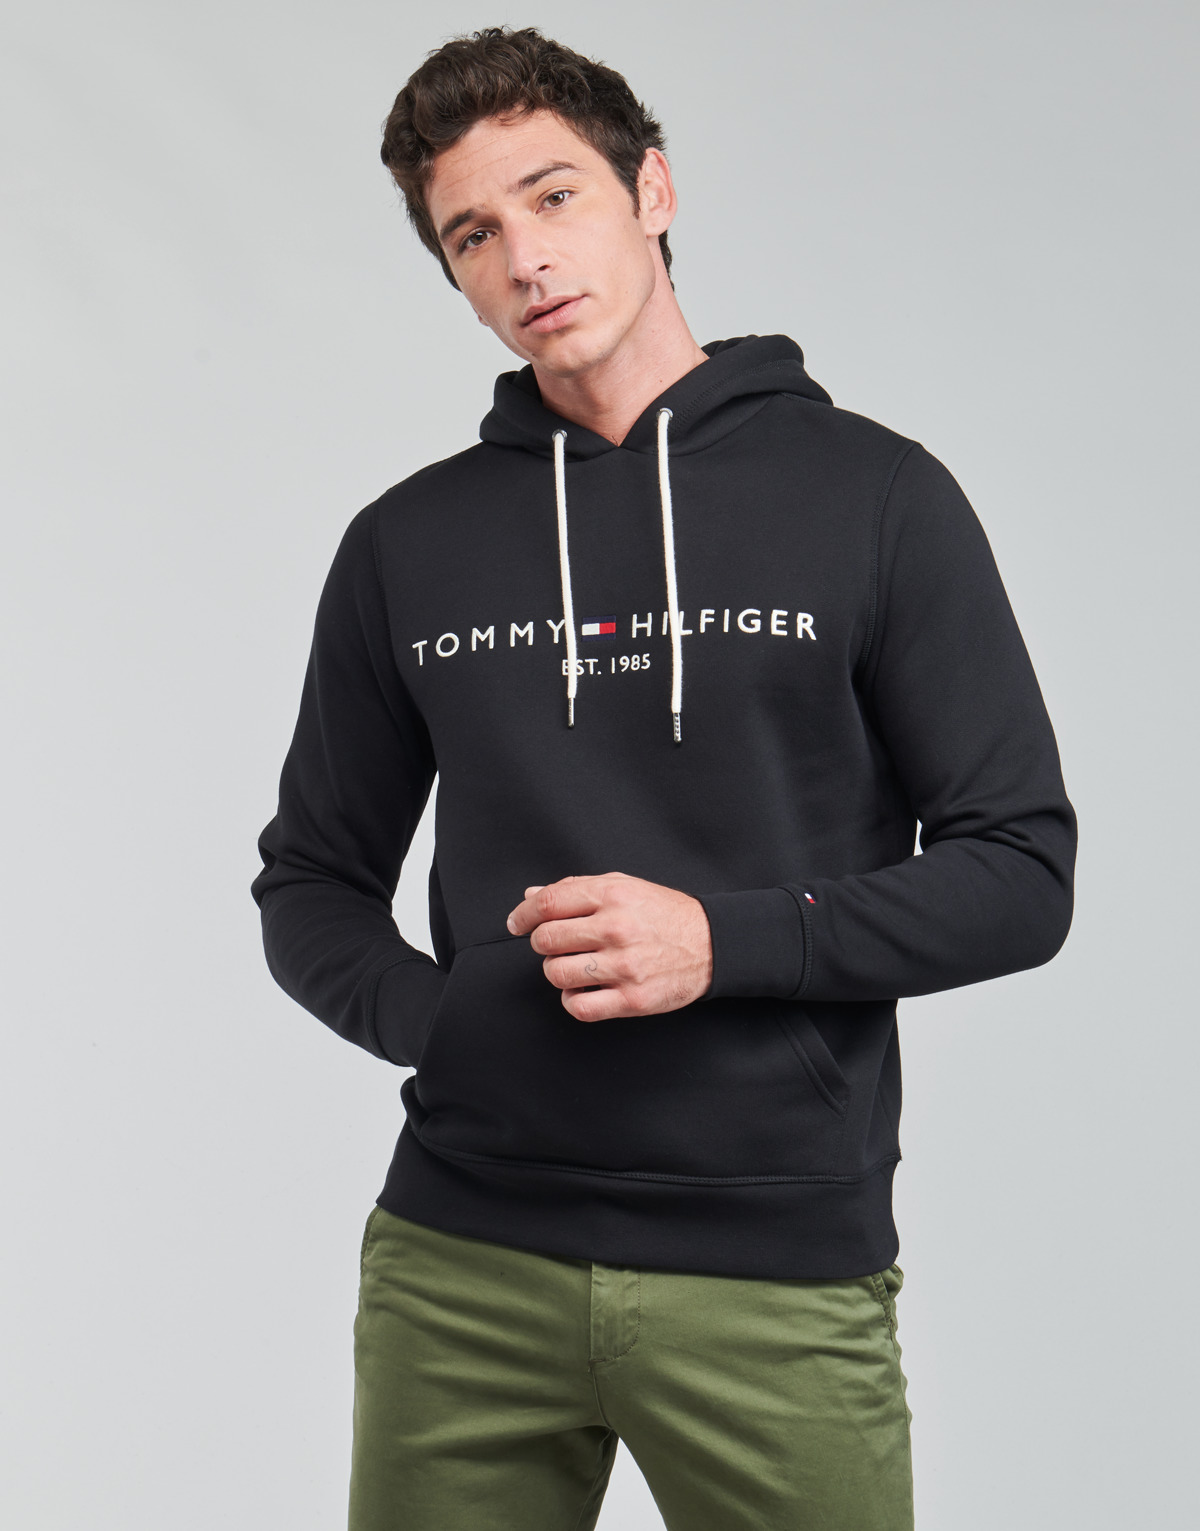 Tommy Hilfiger - TOMMY SPORT, Make your sportswear as